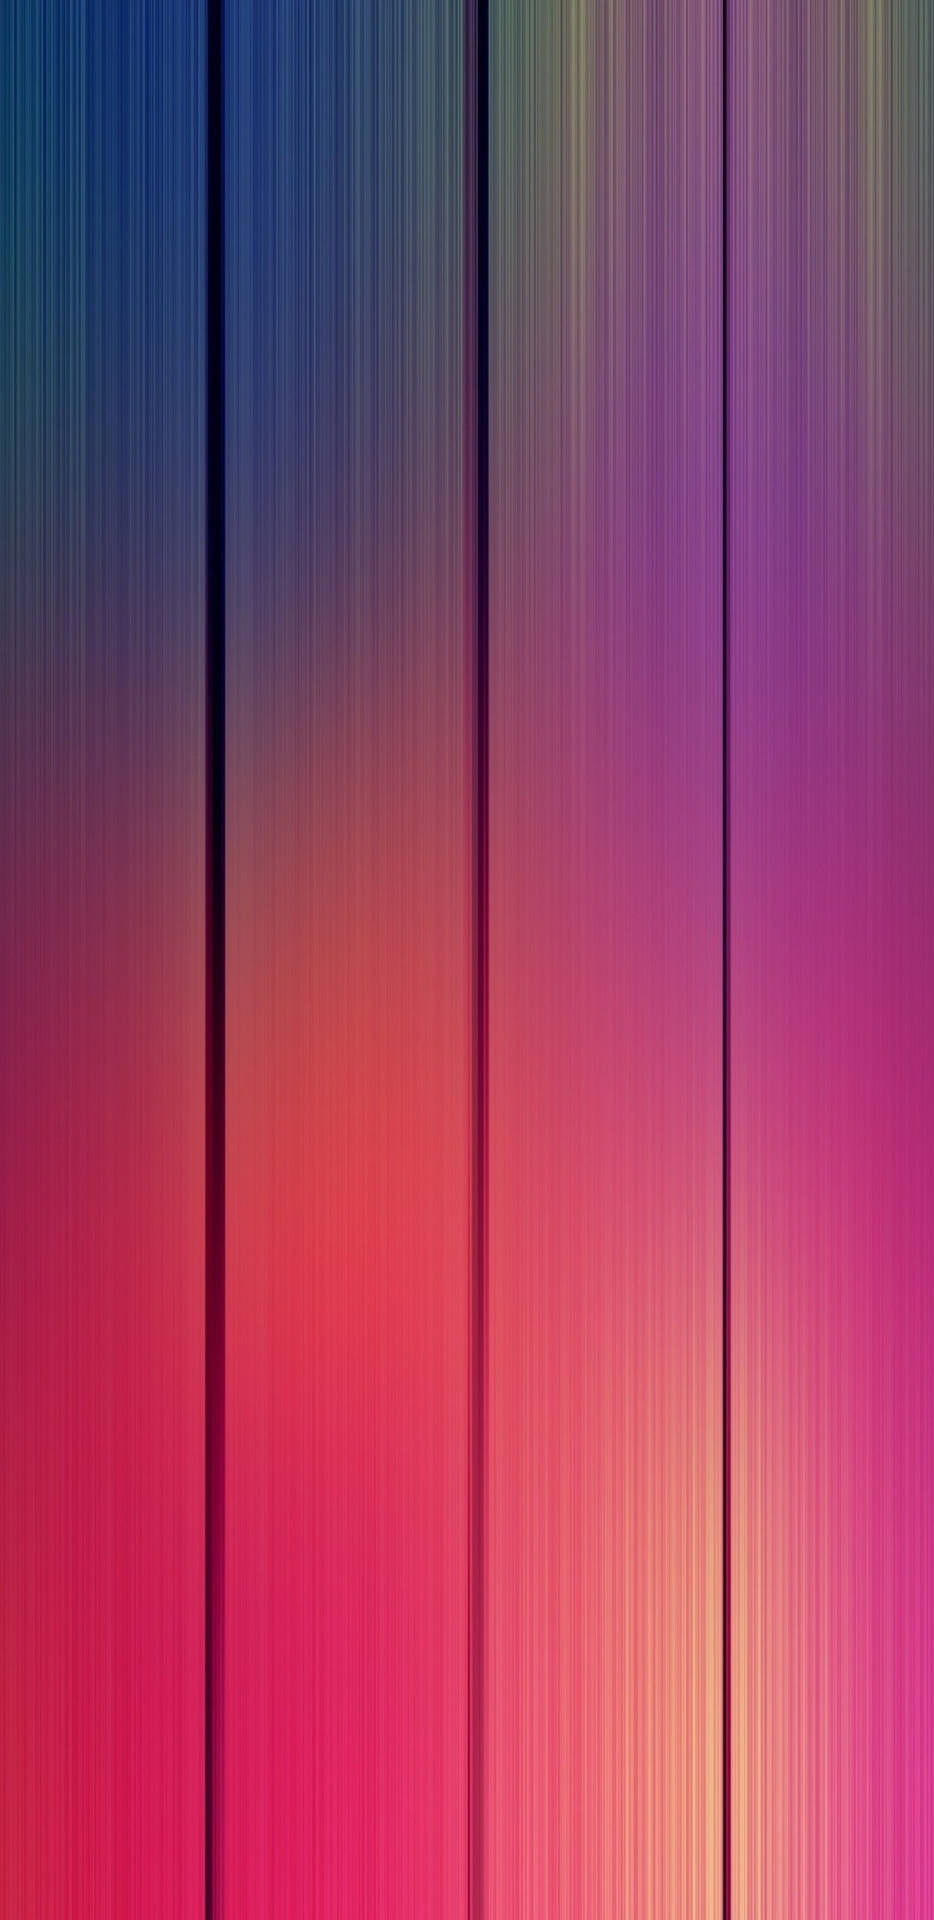 Pixel 3 Xl Colorful Wood Panels Background